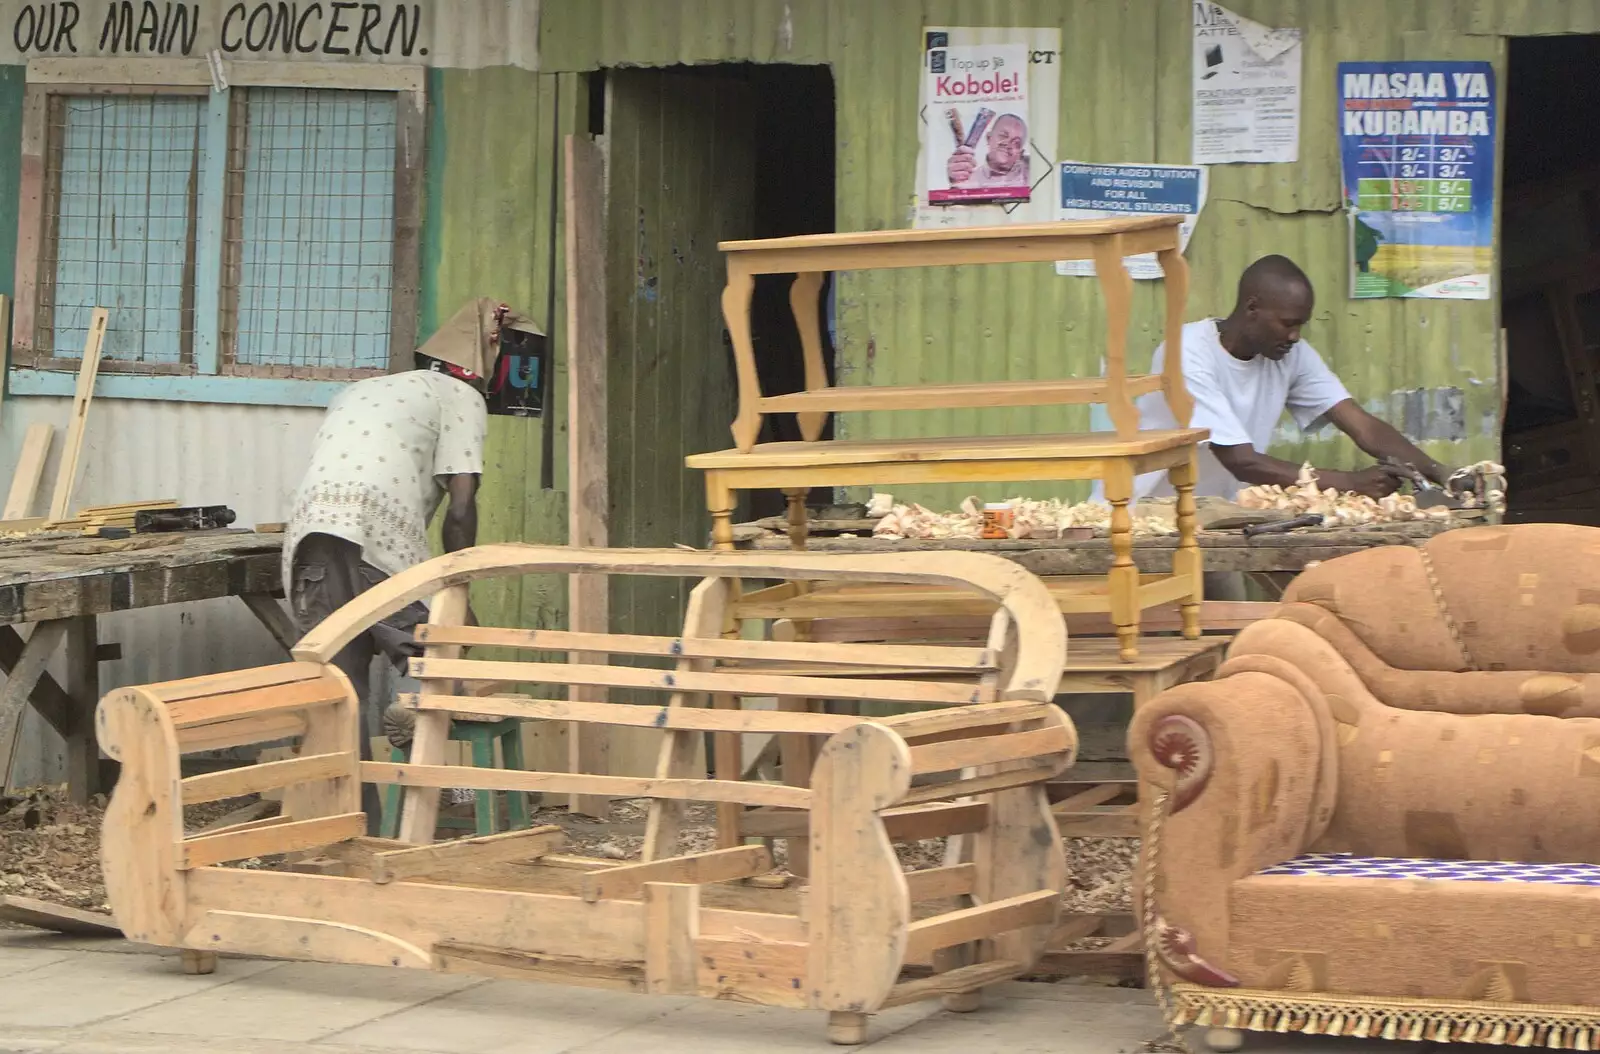 Some dudes make furniture by the roadside, from Nairobi and the Road to Maasai Mara, Kenya, Africa - 1st November 2010